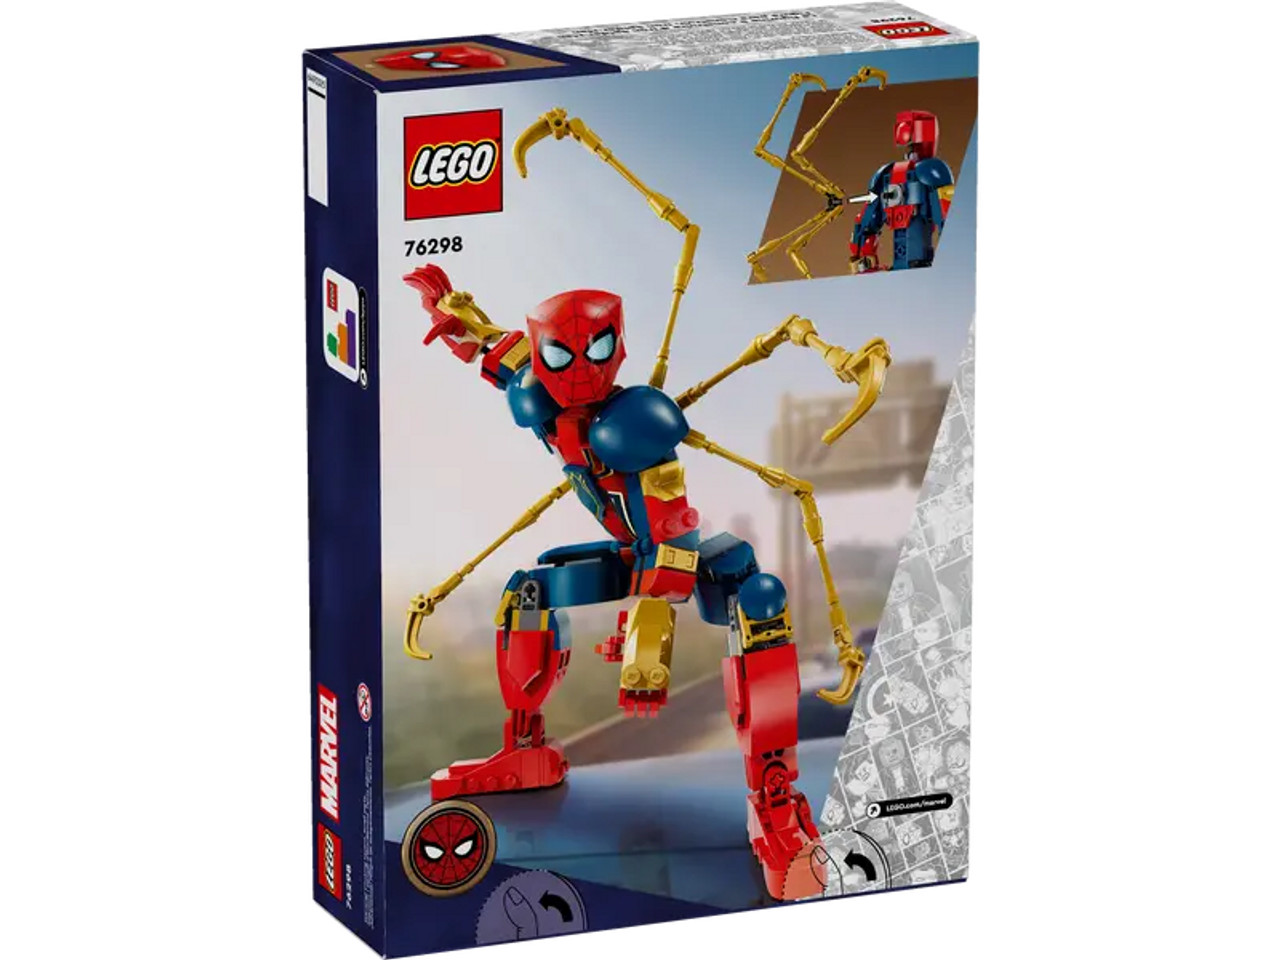 Iron Spiderman Construction Figure